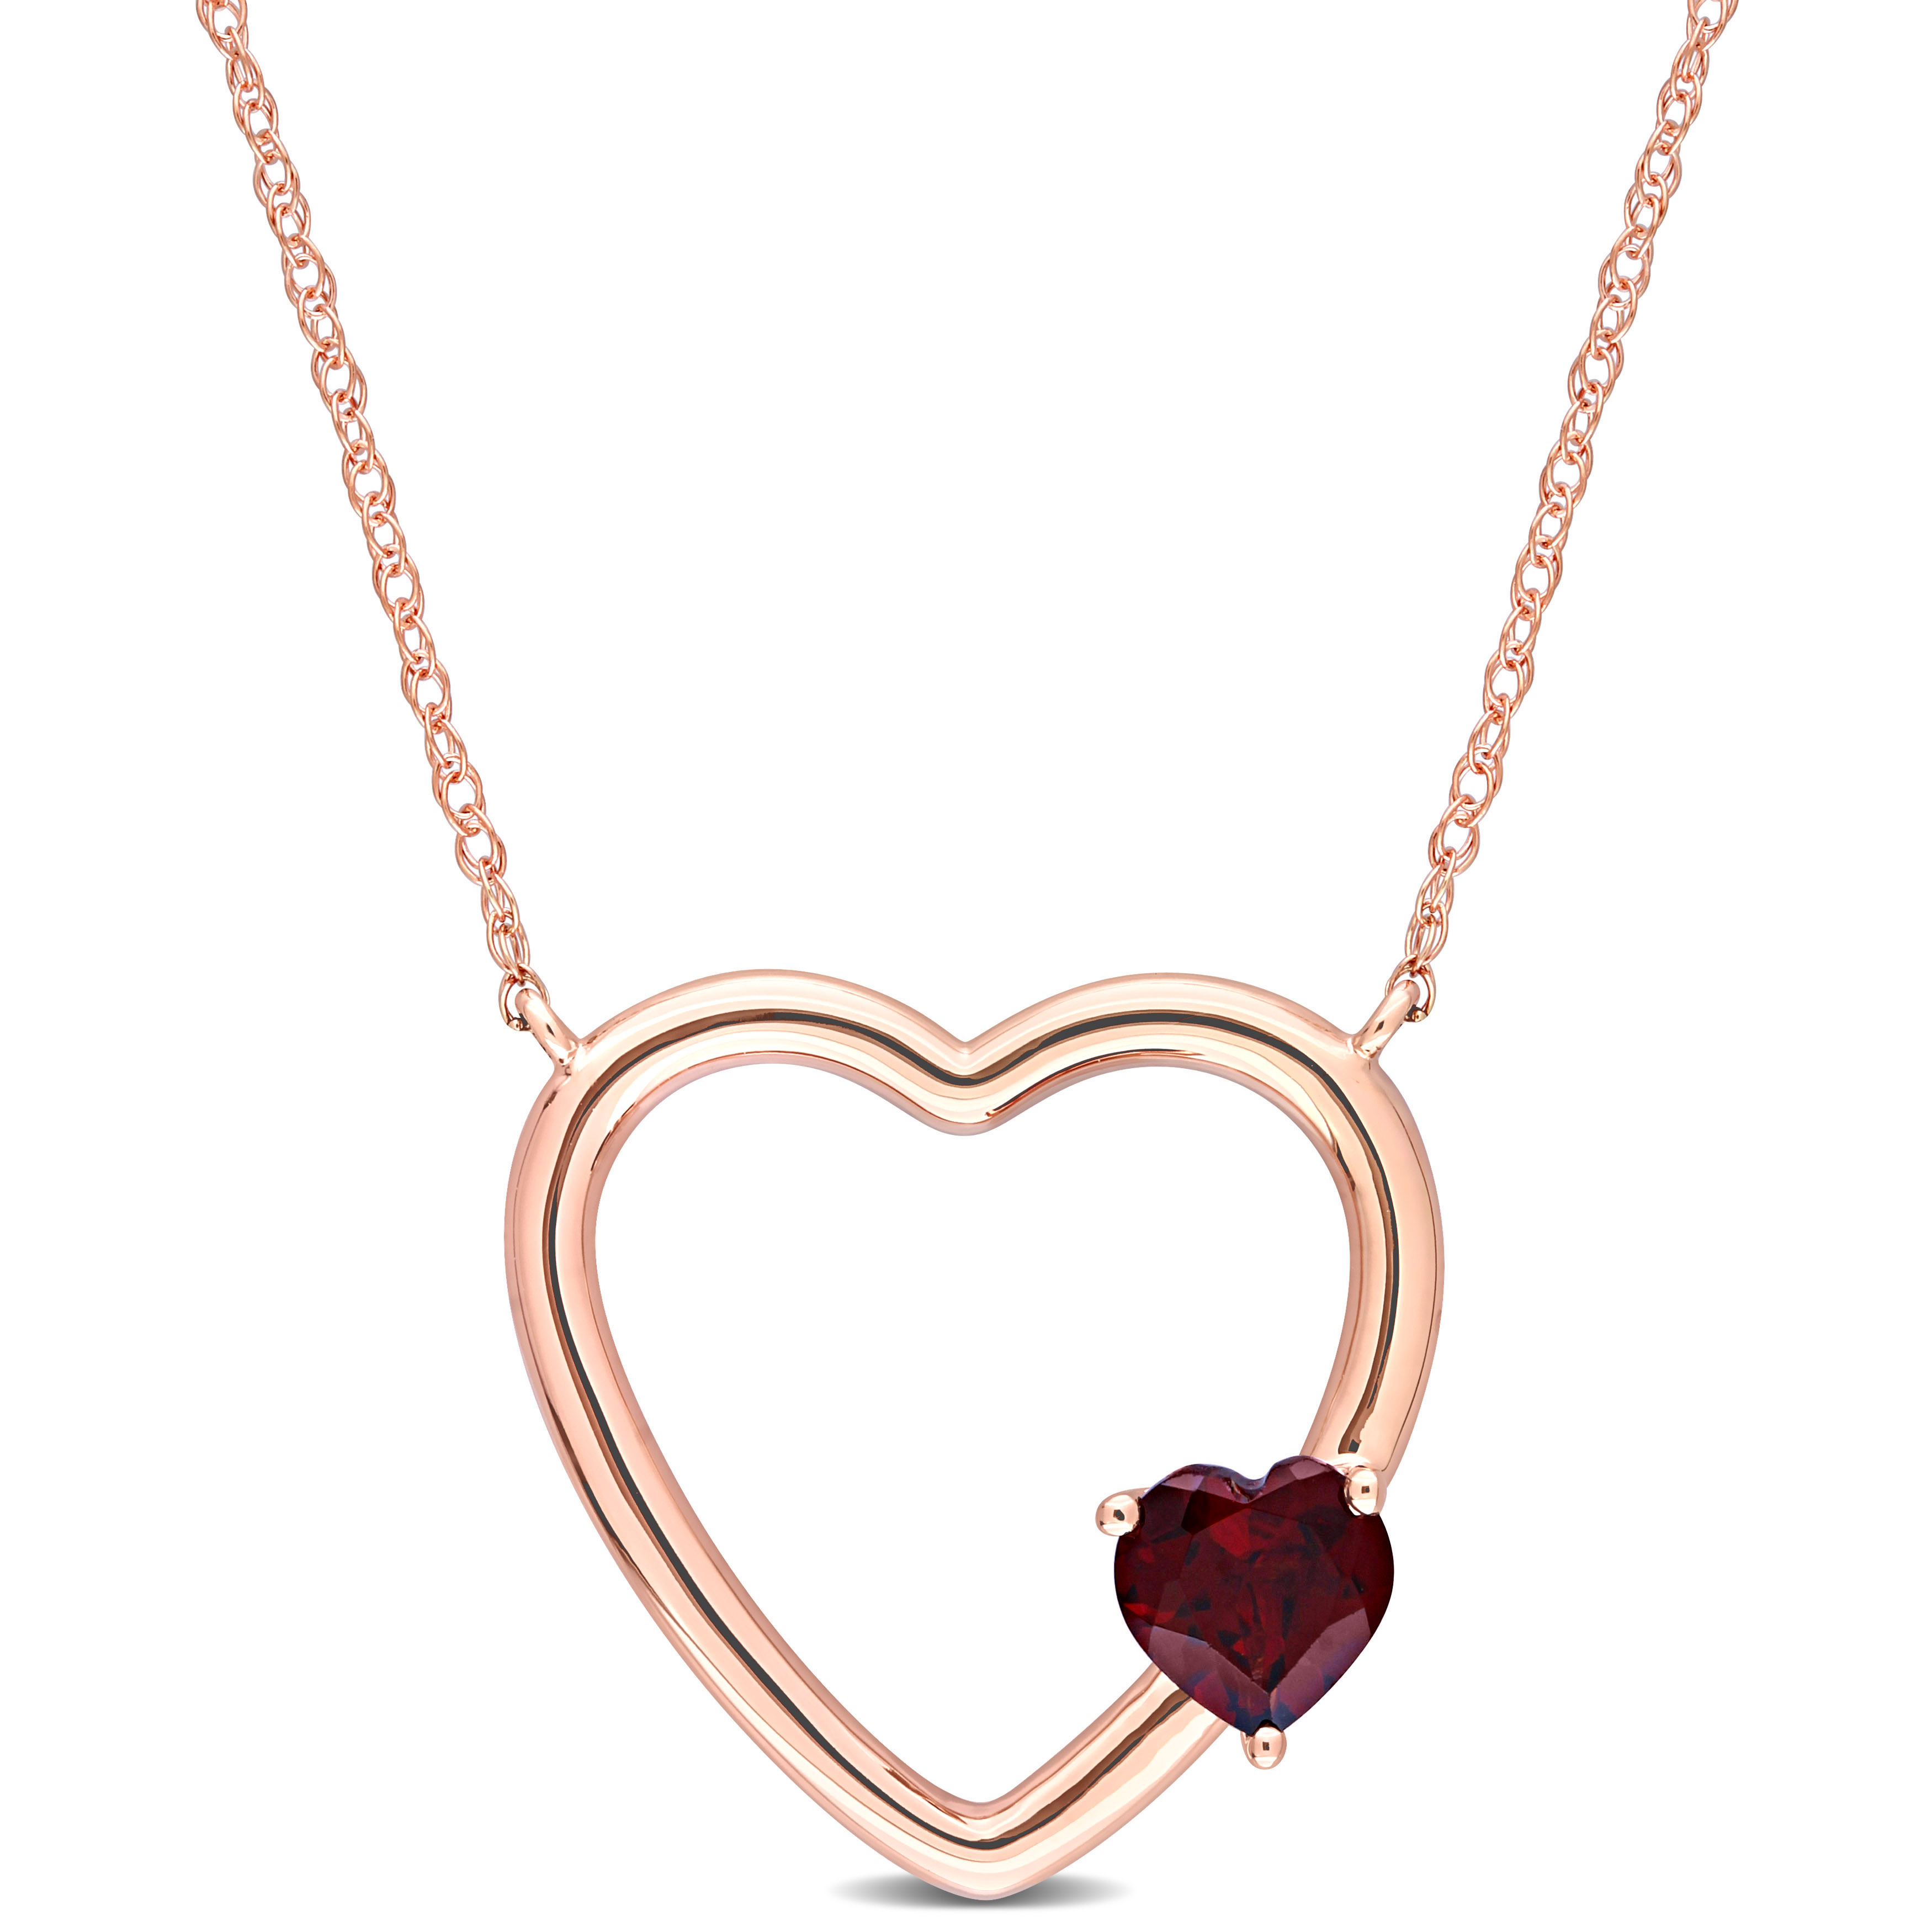 1/2 CT TGW Garnet Open Heart Pendant with Chain in 10k Rose Gold